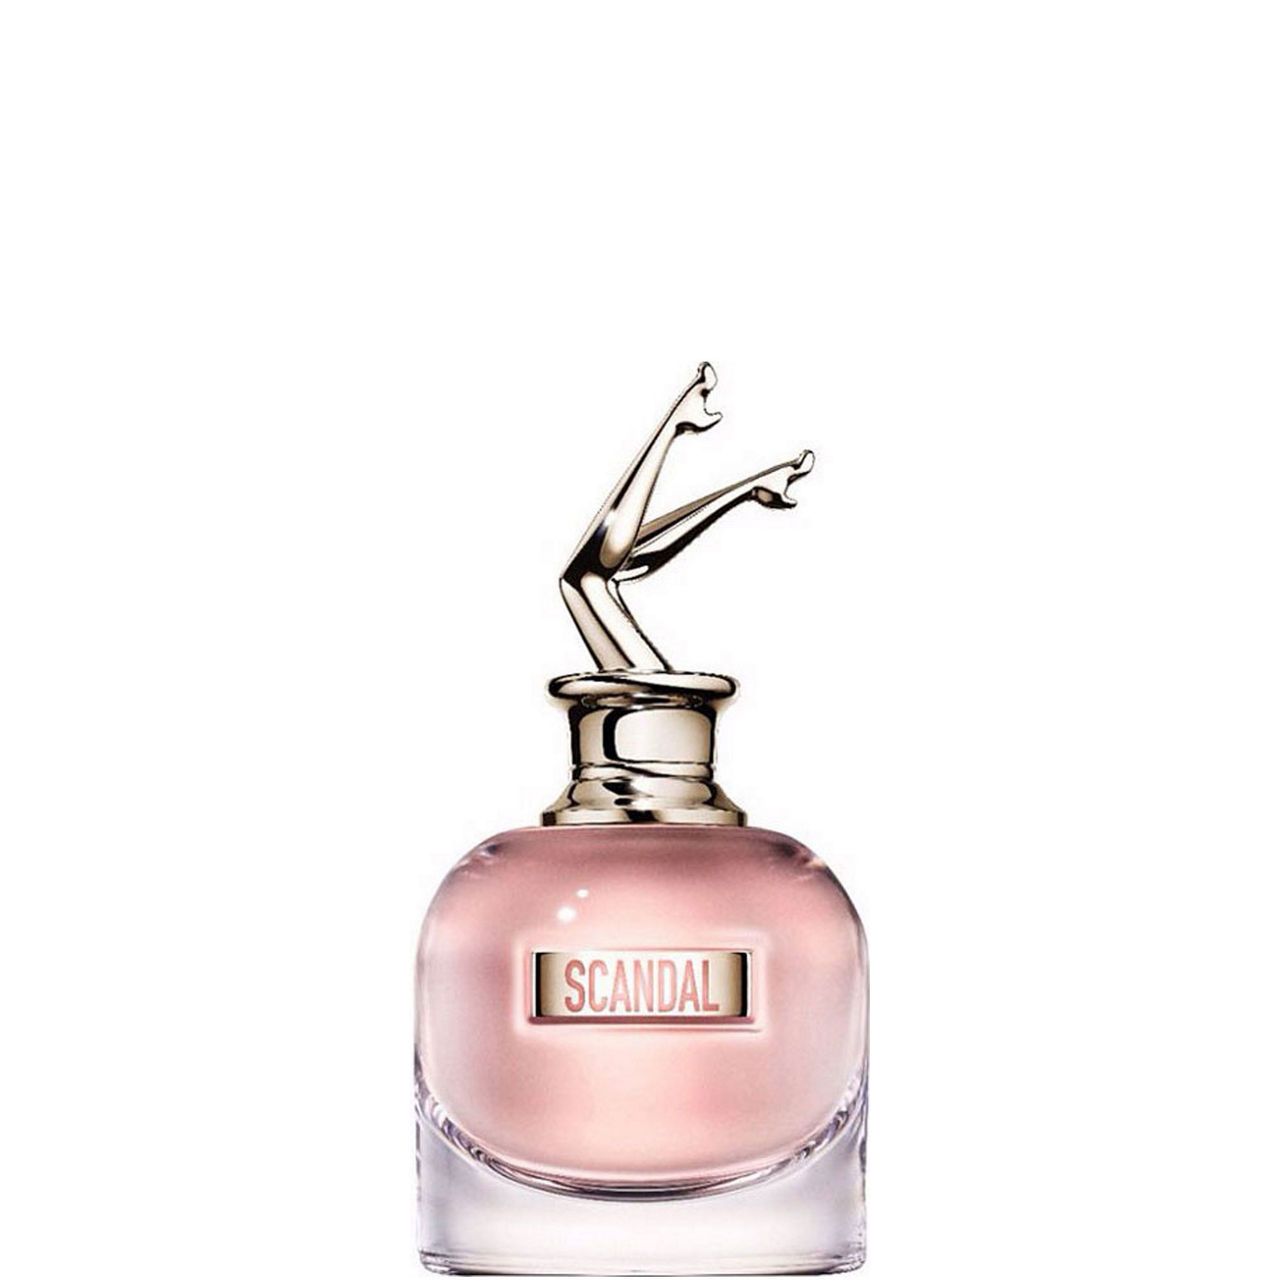 Jean Paul Gaultier: Perfume & gift sets